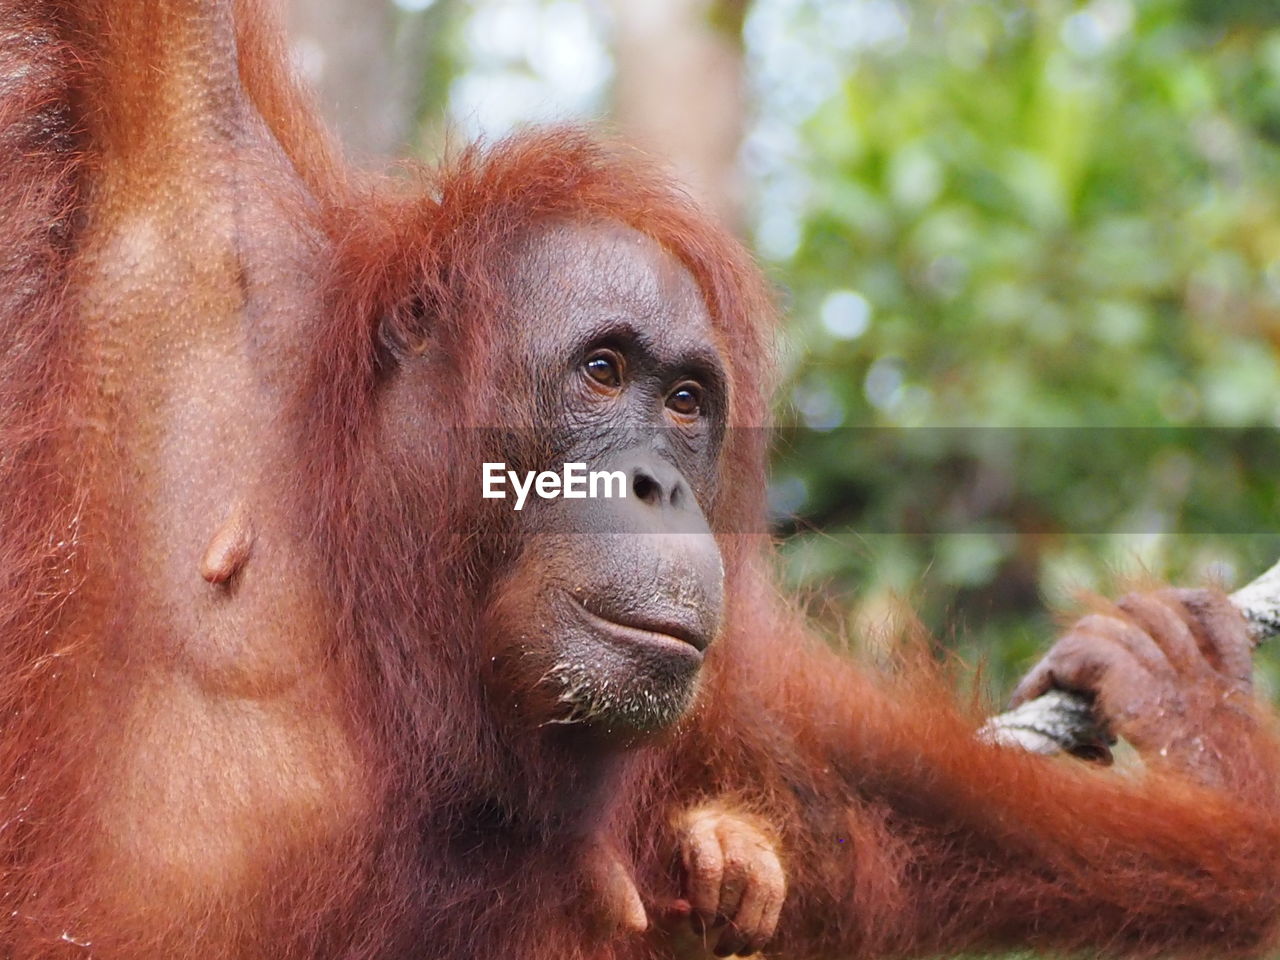 Close-up portrait of a orangutan